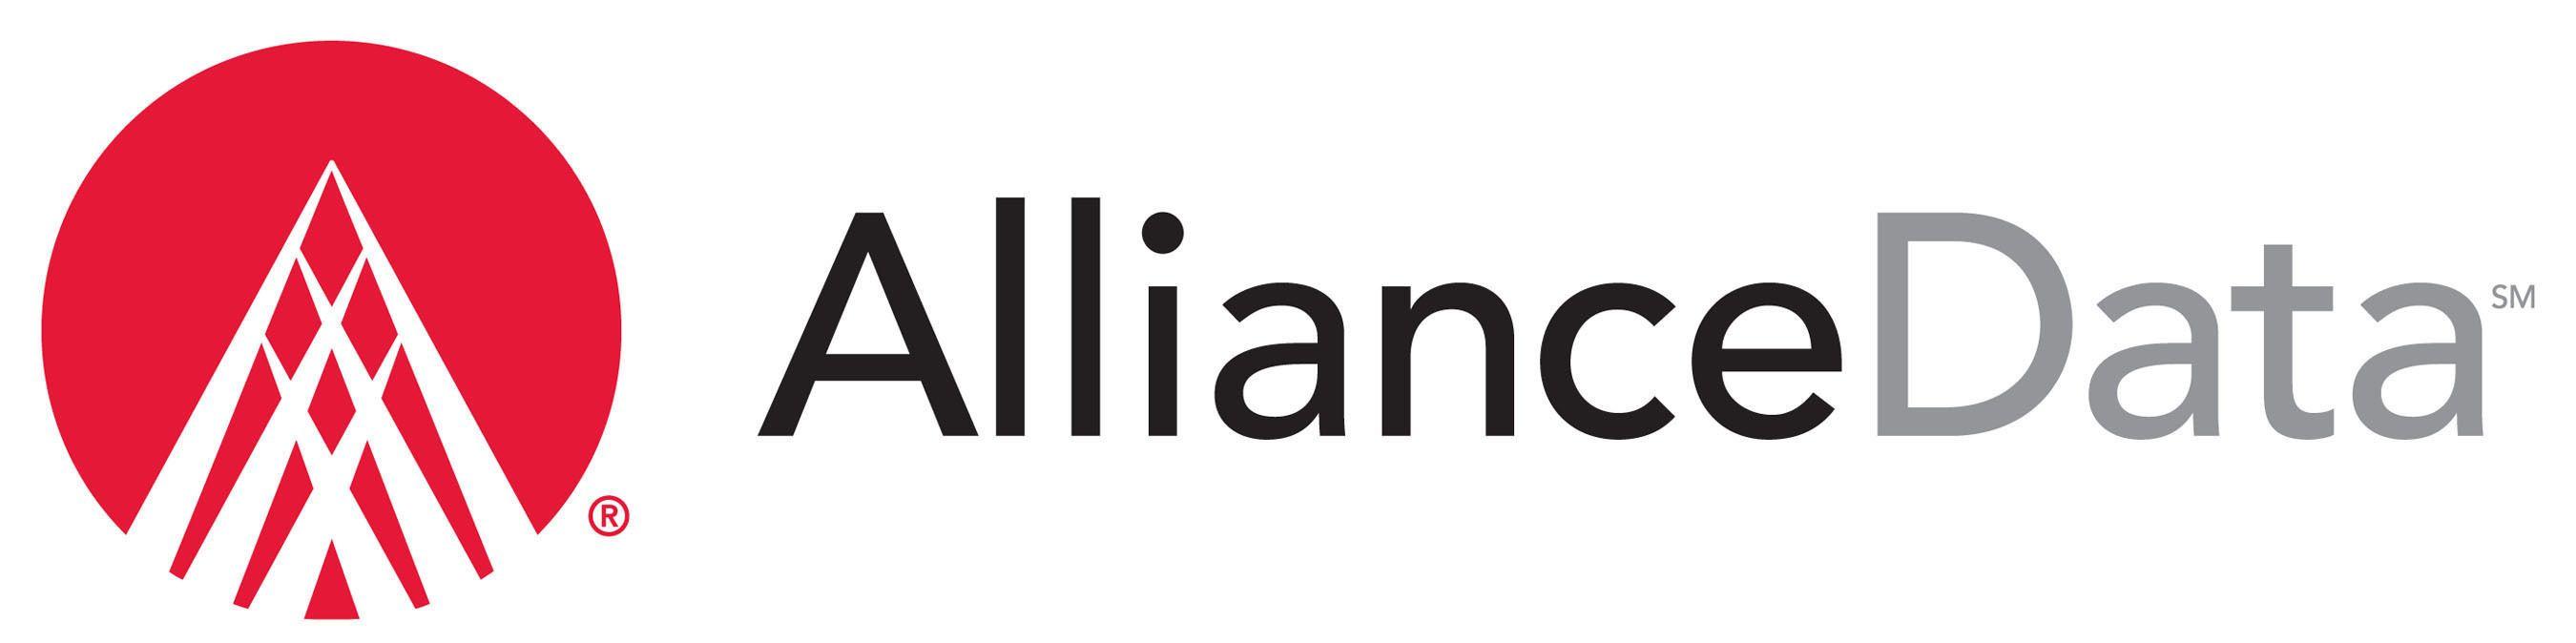 LoyaltyOne Logo - Alliance Data's LoyaltyOne Business Announces Multi Year Consulting